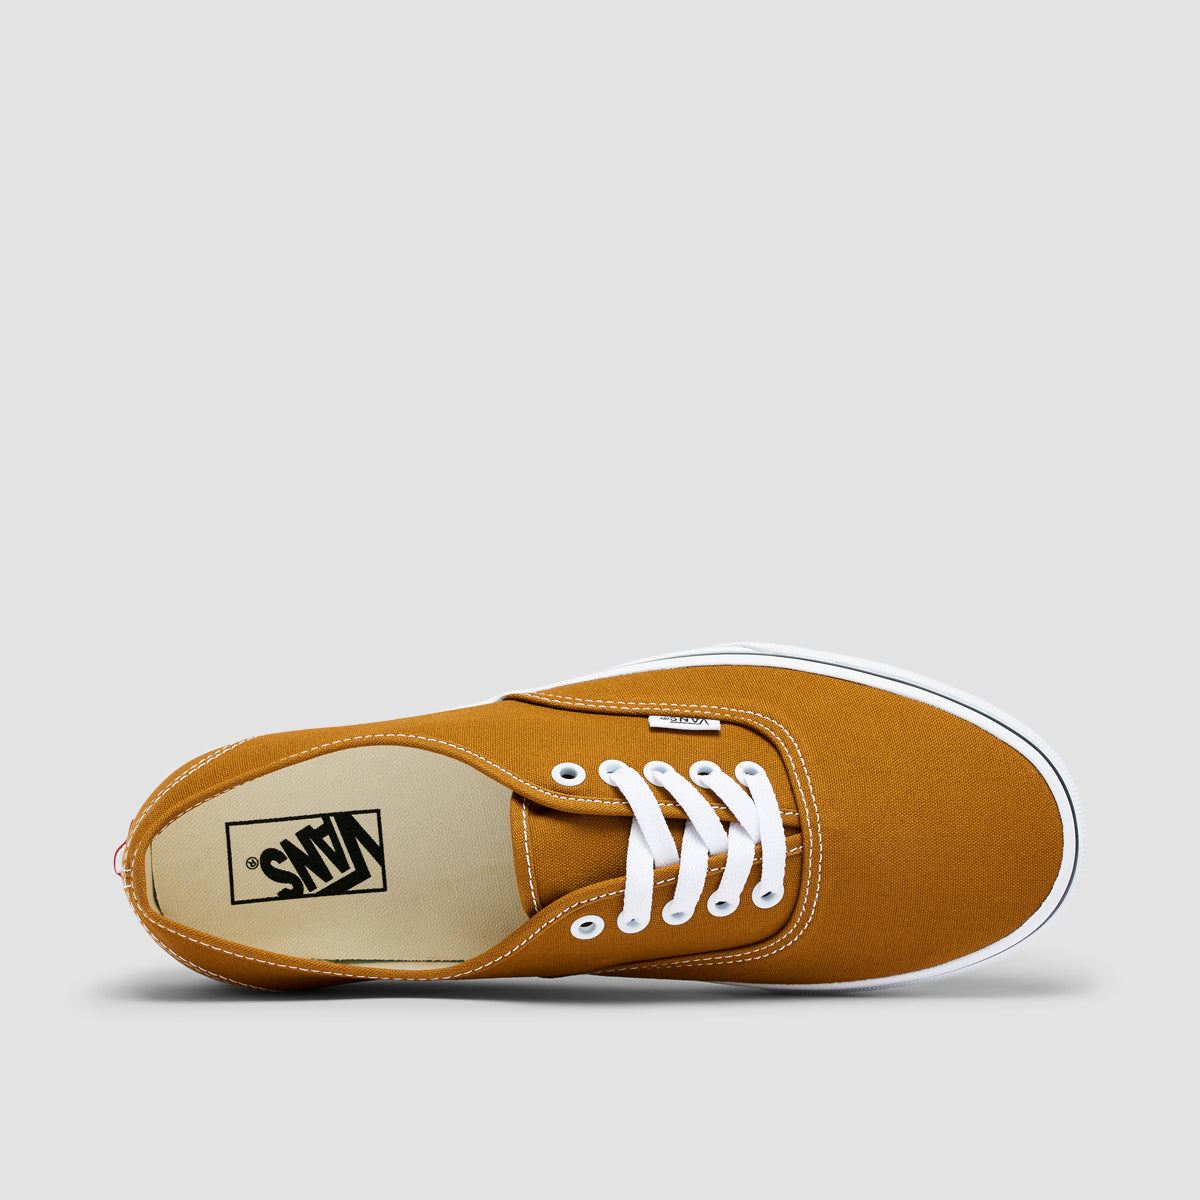 Vans Authentic Shoes - Golden Brown